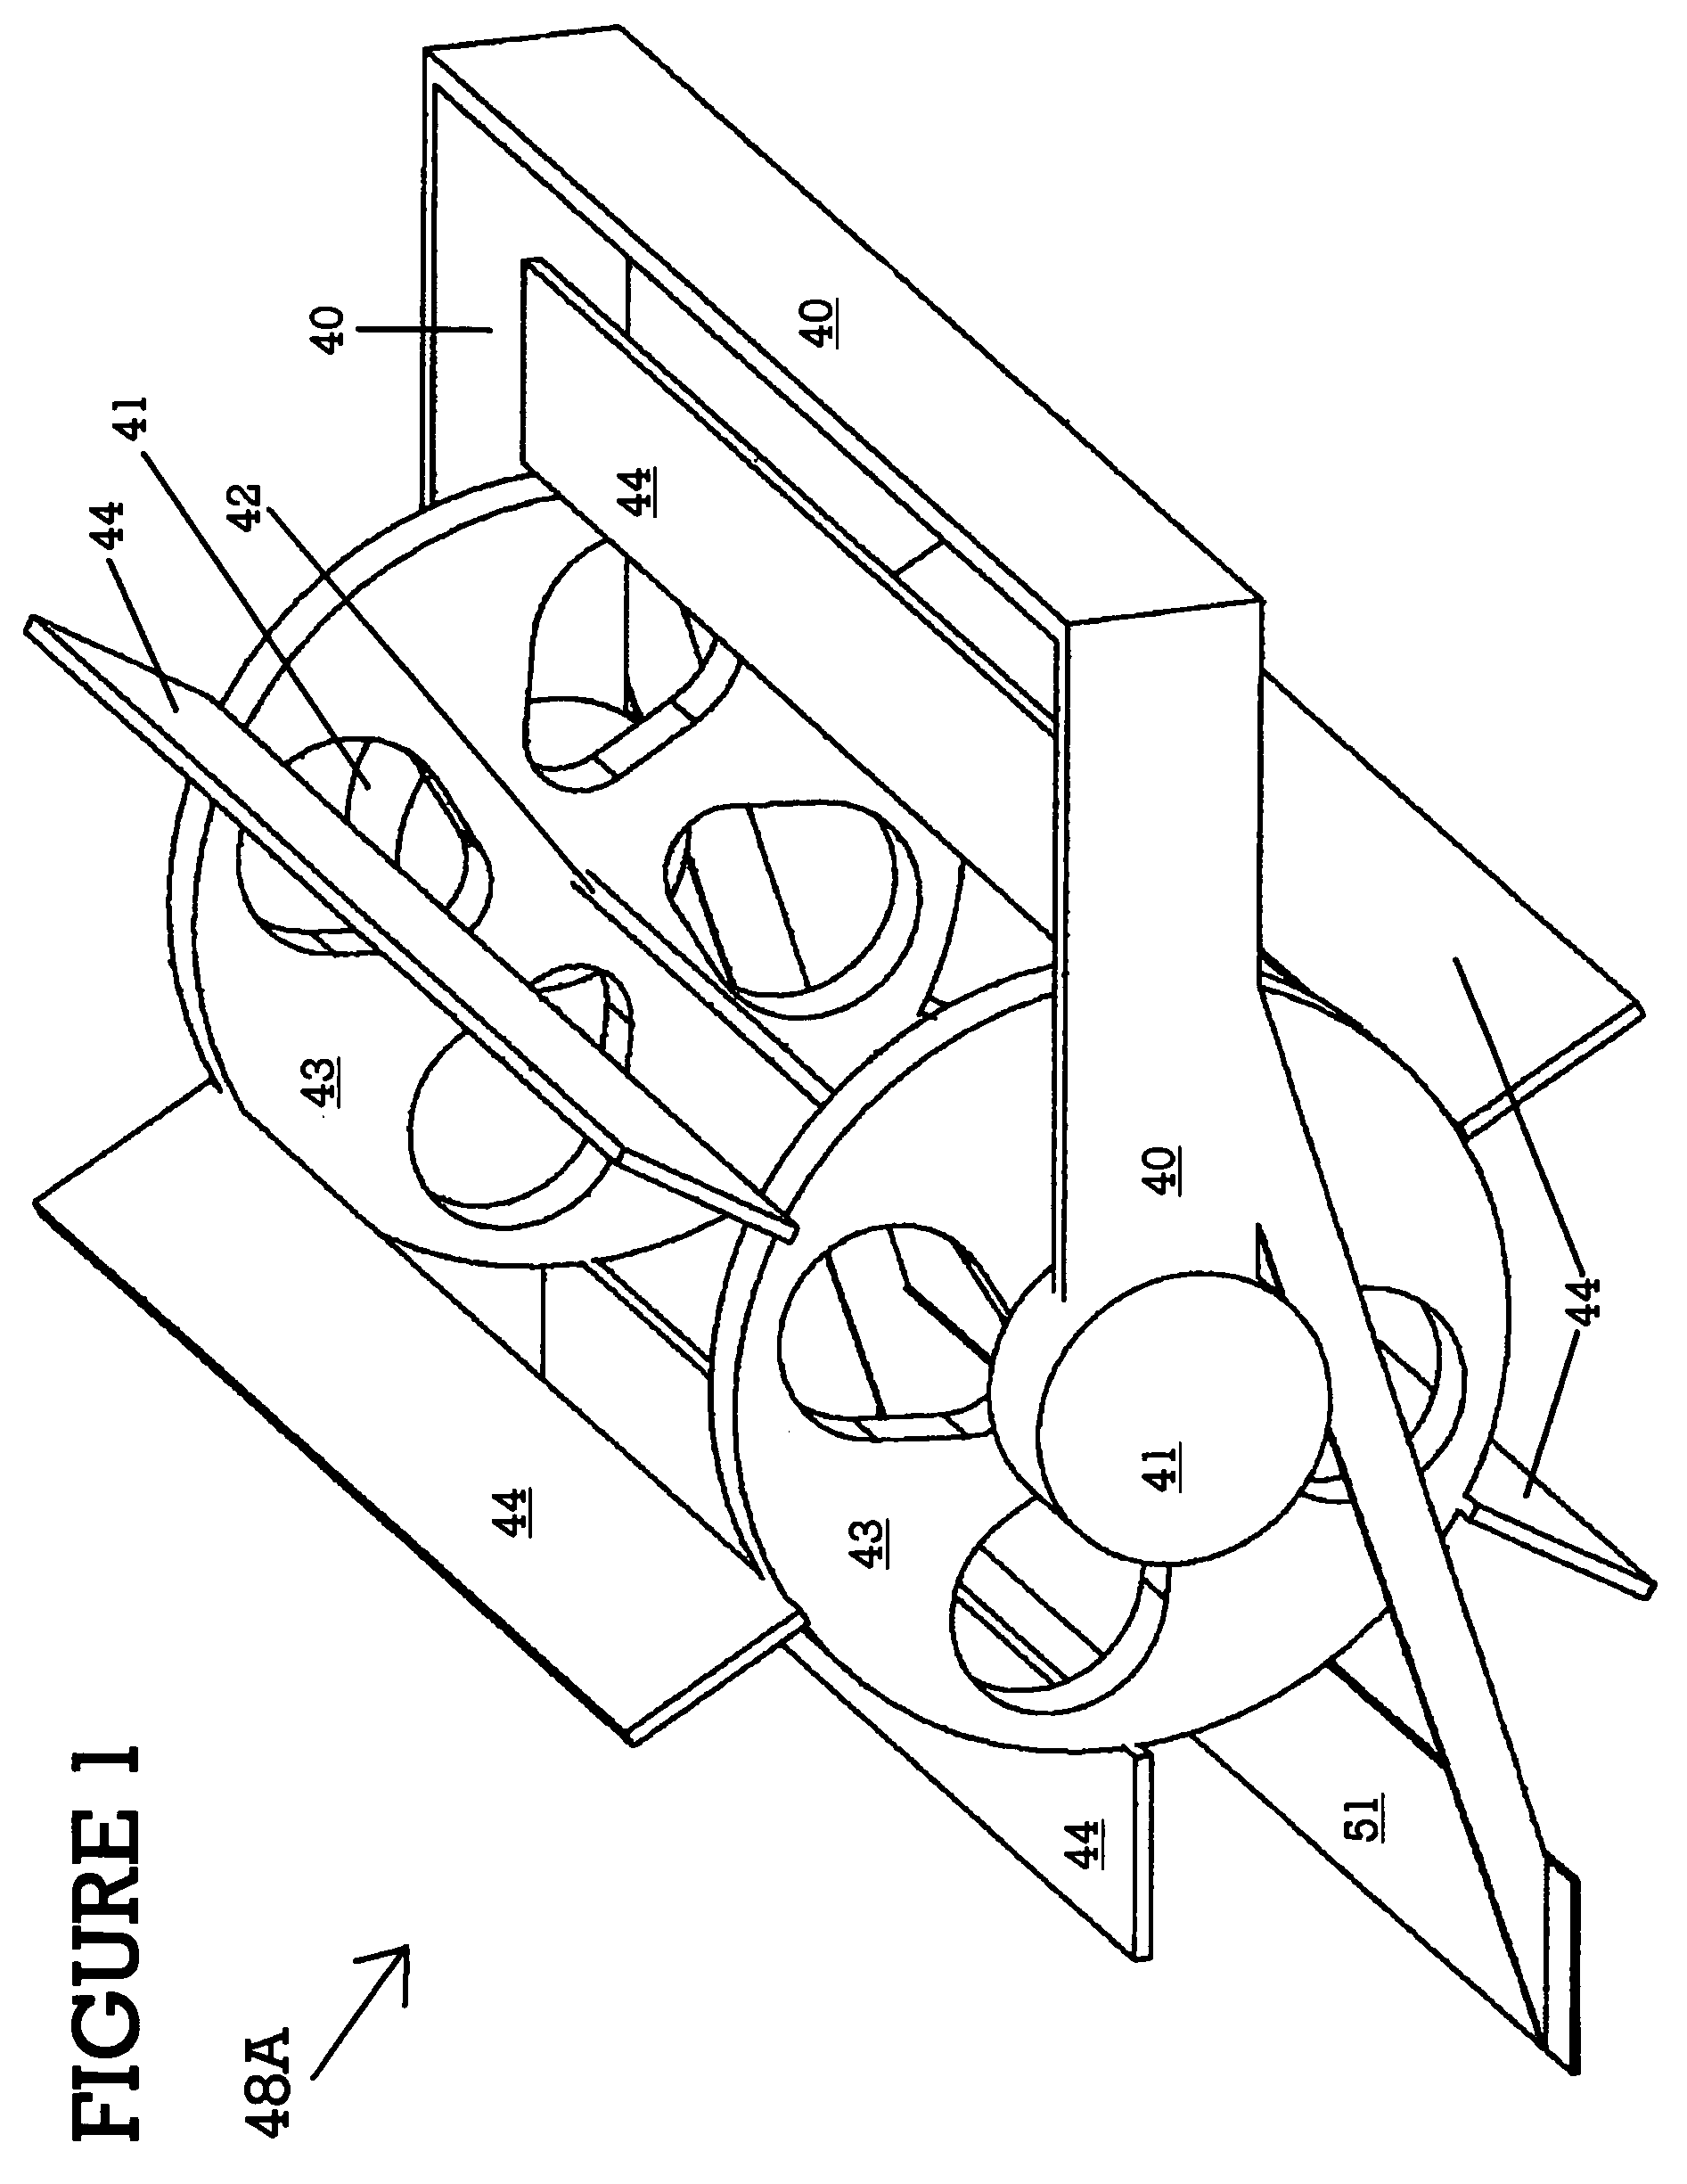 Paddlewheel vessel thruster